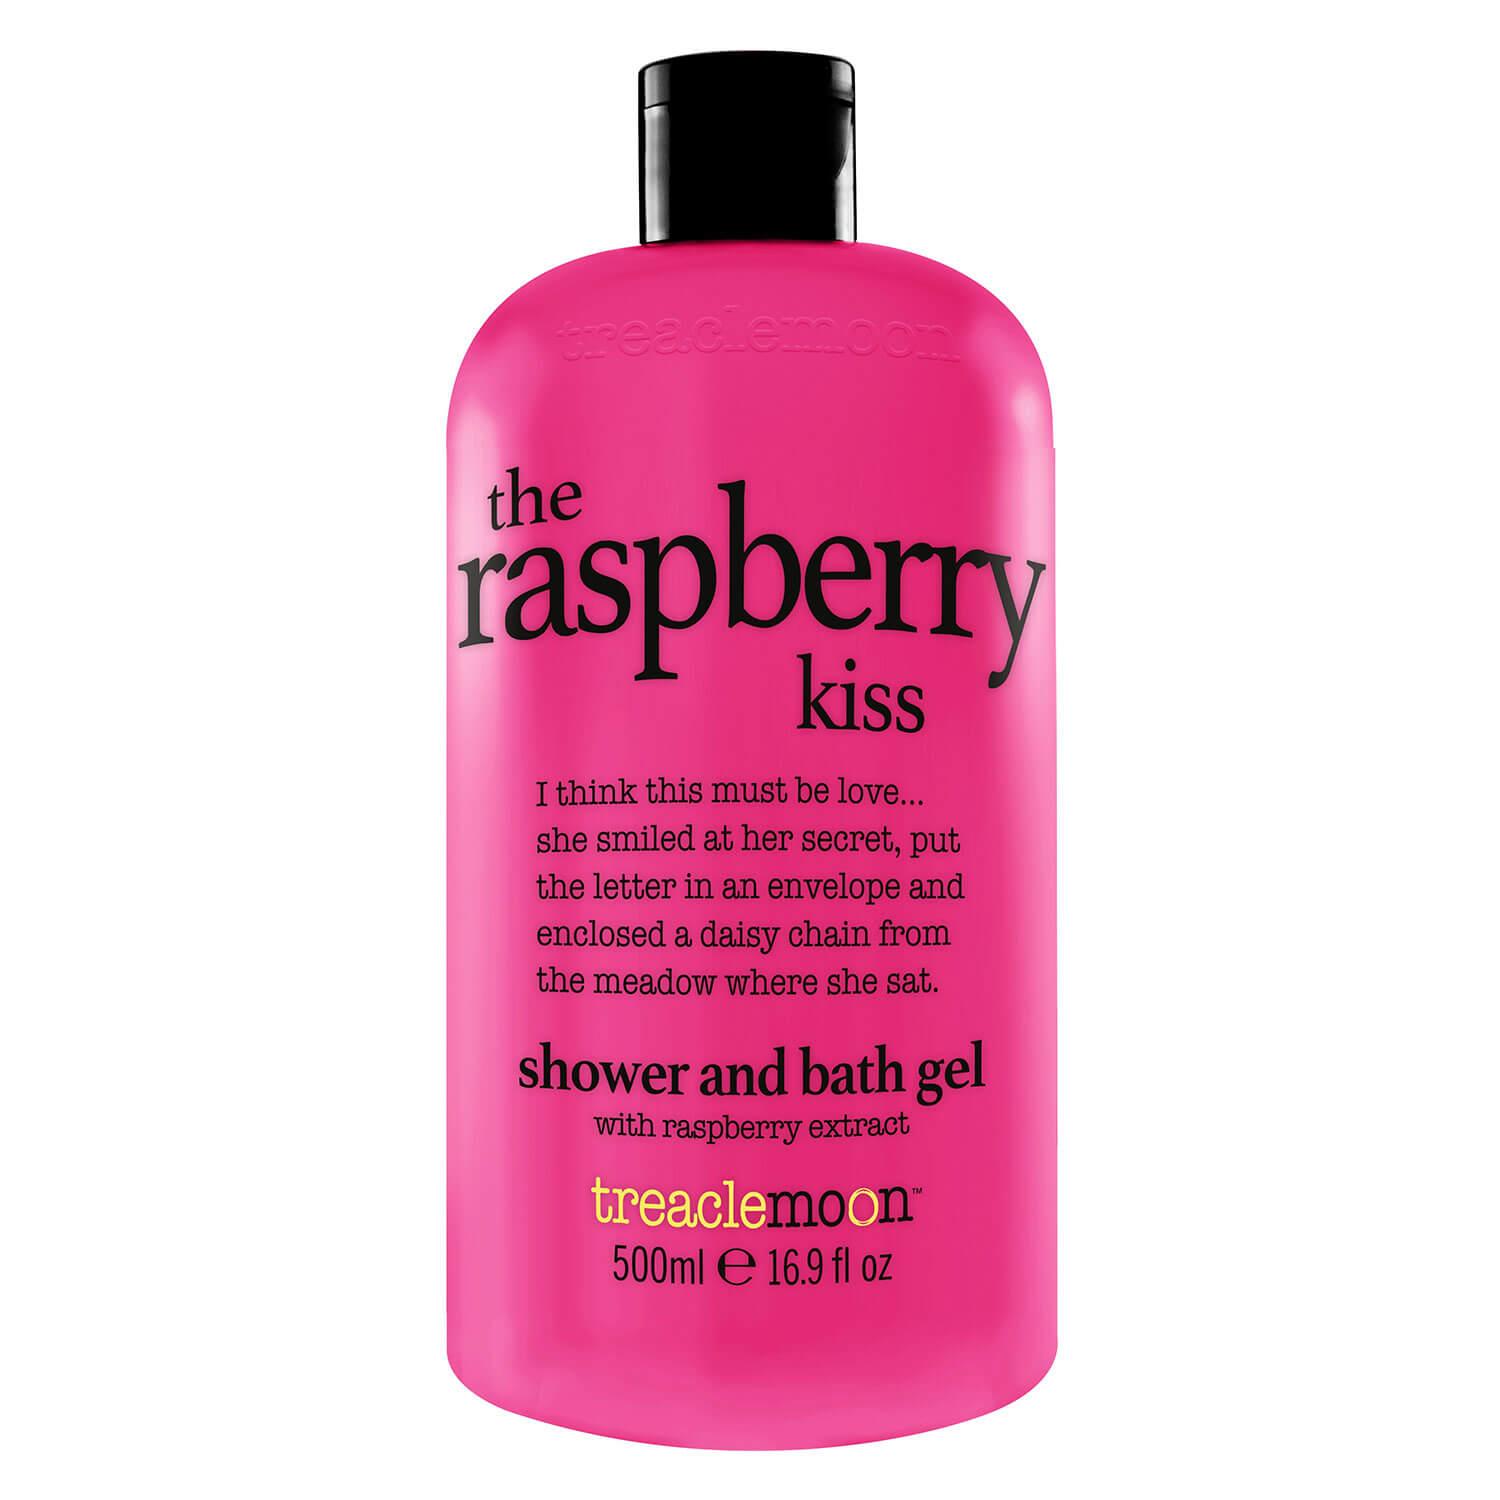 treaclemoon - the raspberry kiss bath and shower gel